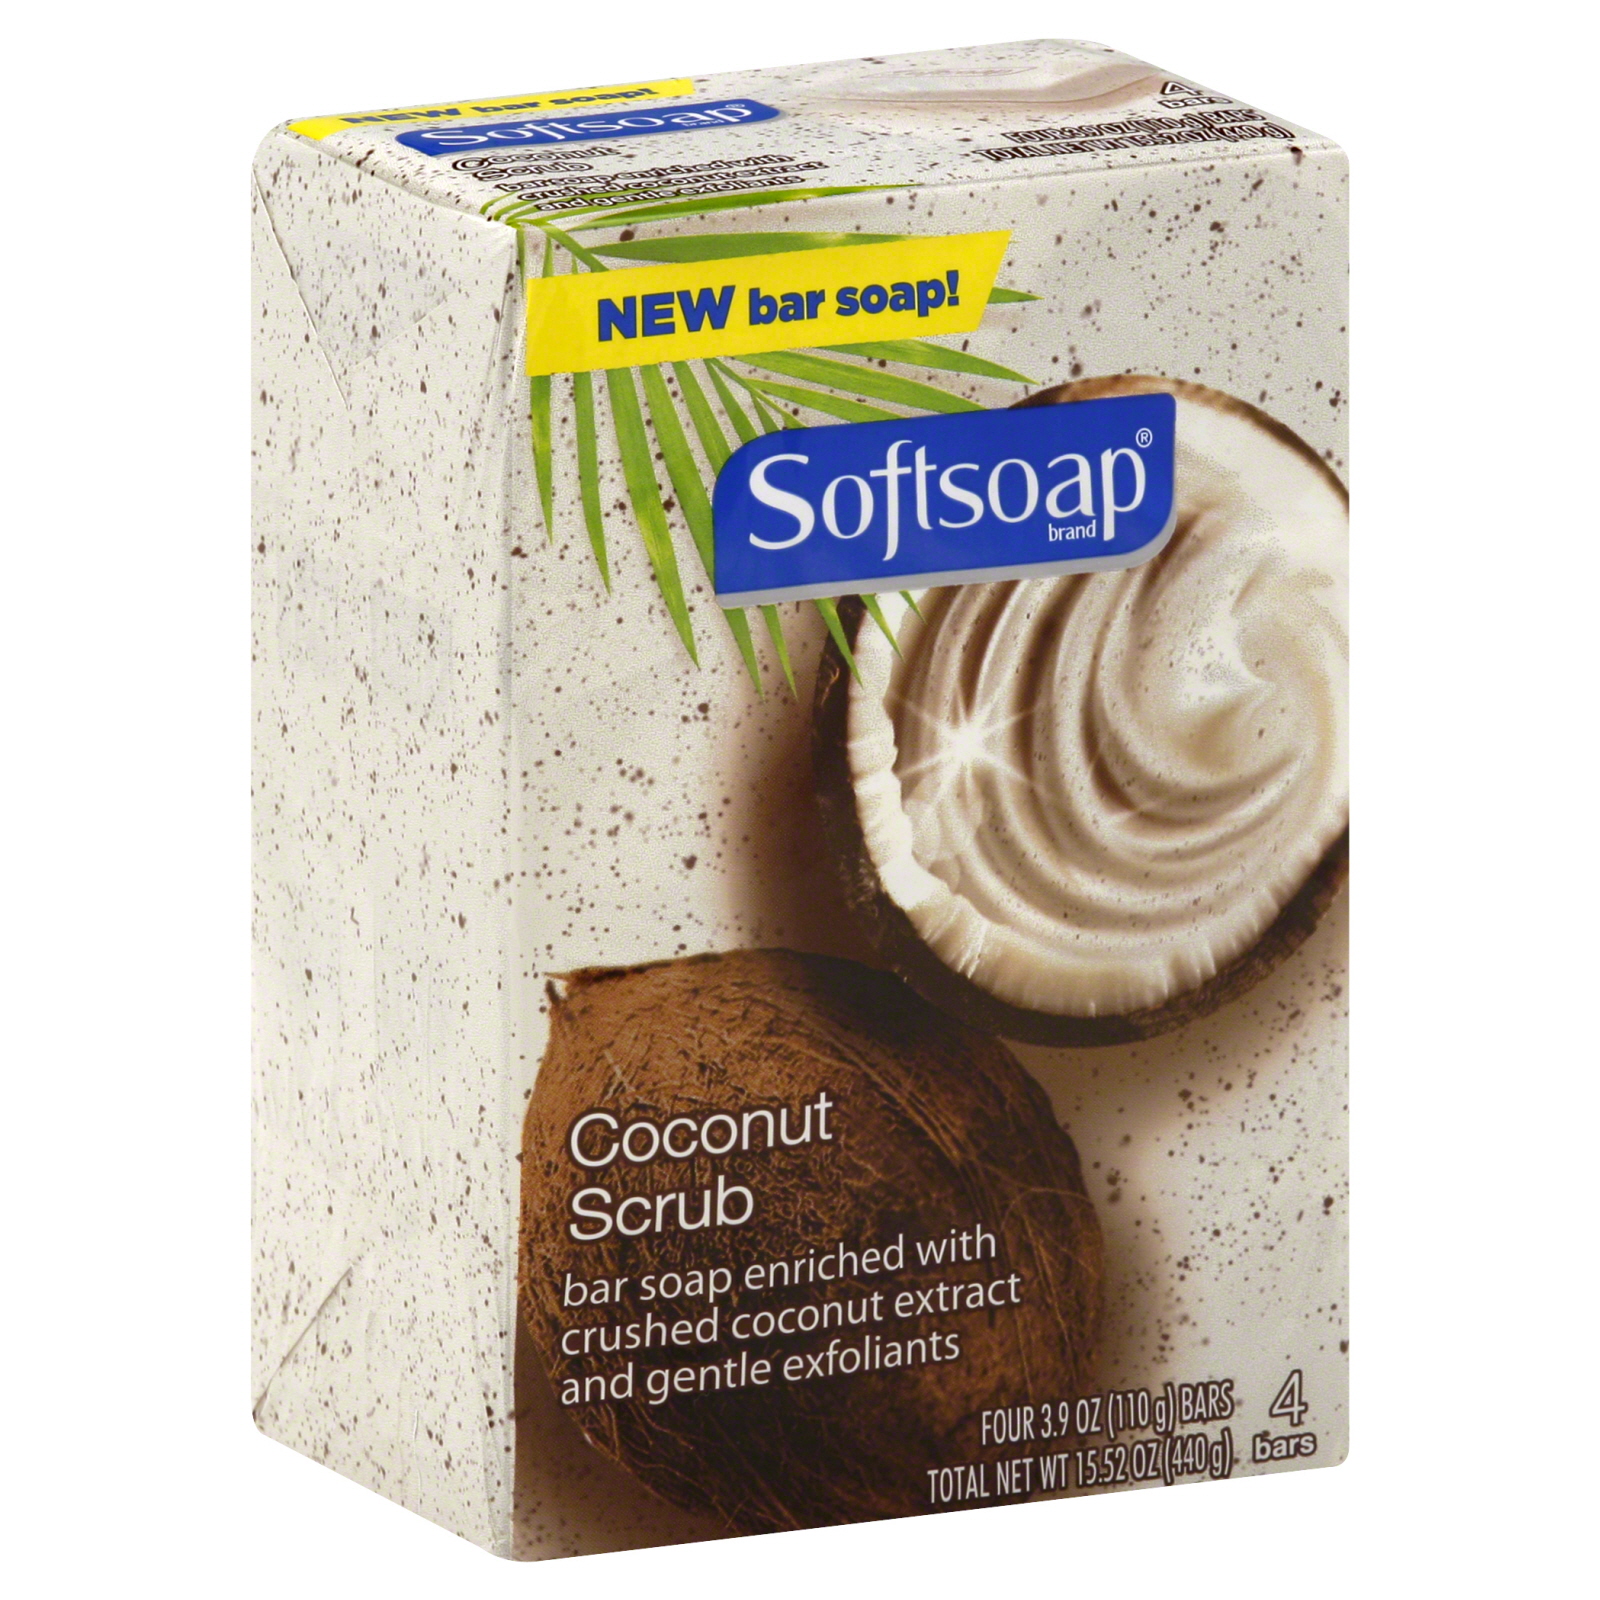 Softsoap Coconut Scrub Bar Soap- 4 PK